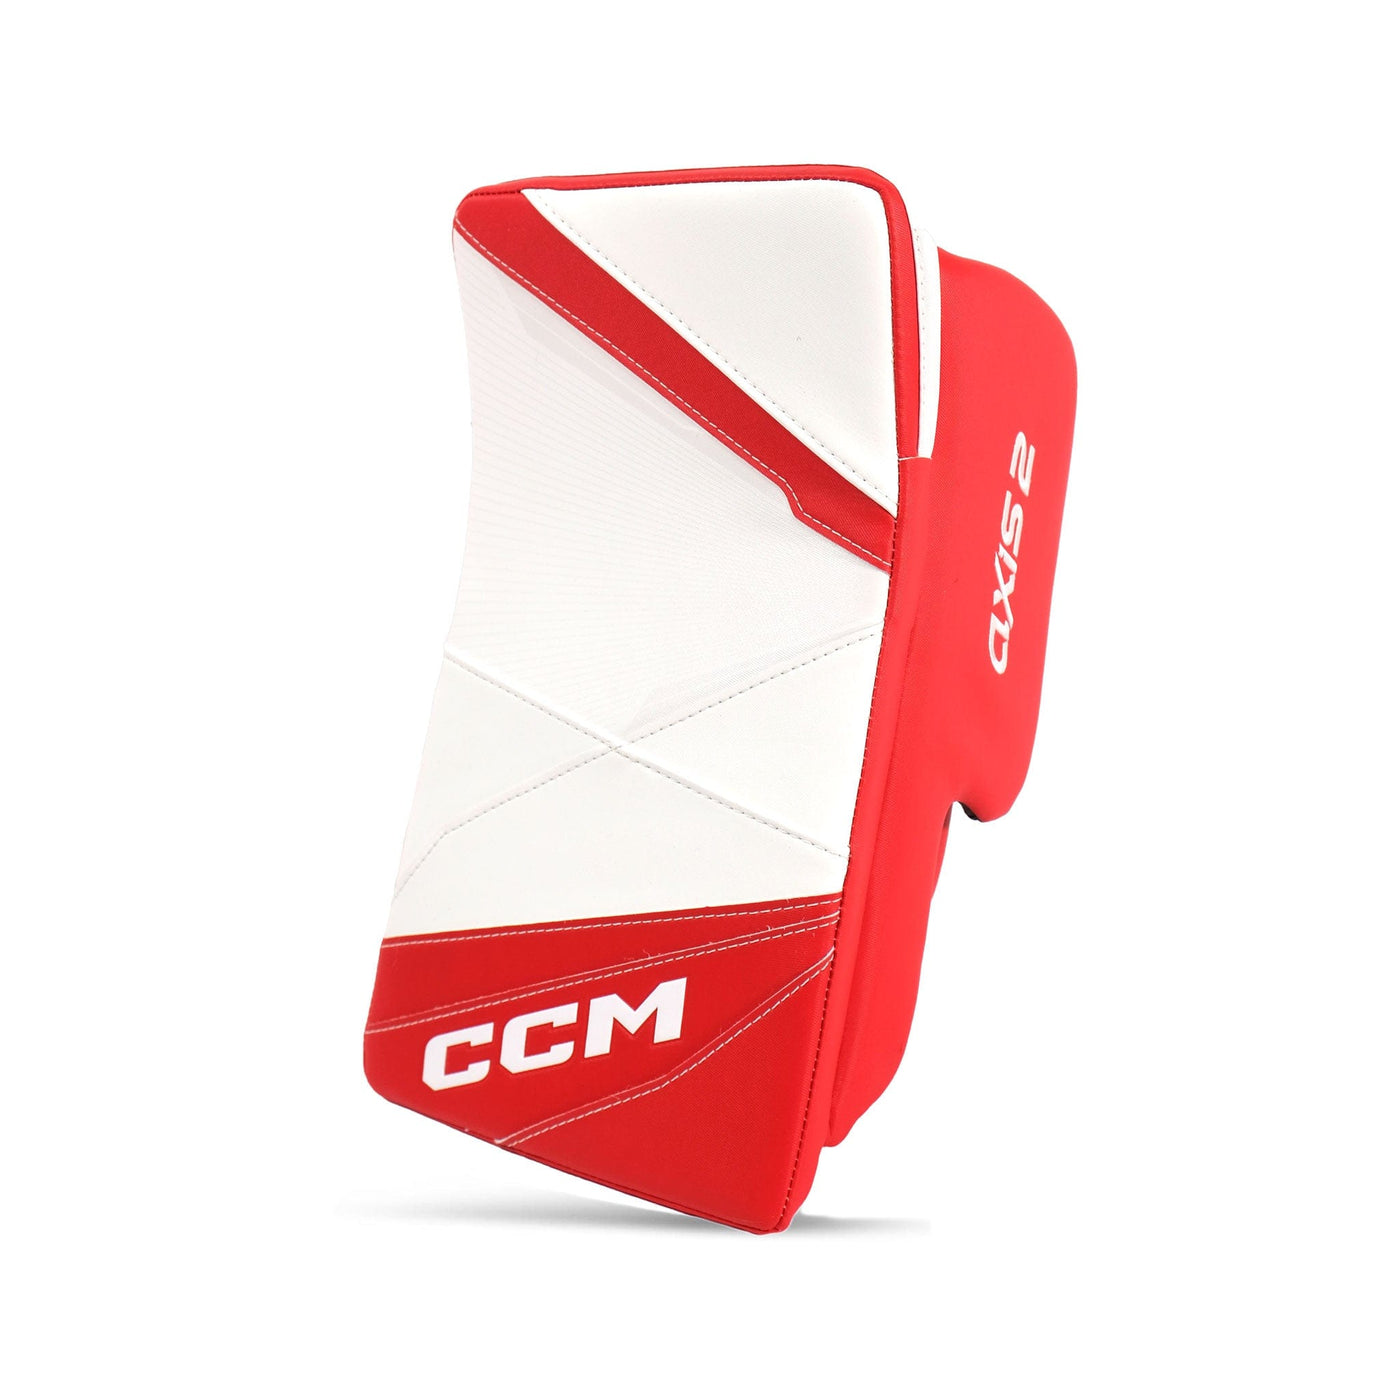 CCM Axis 2 Senior Goalie Blocker - The Hockey Shop Source For Sports